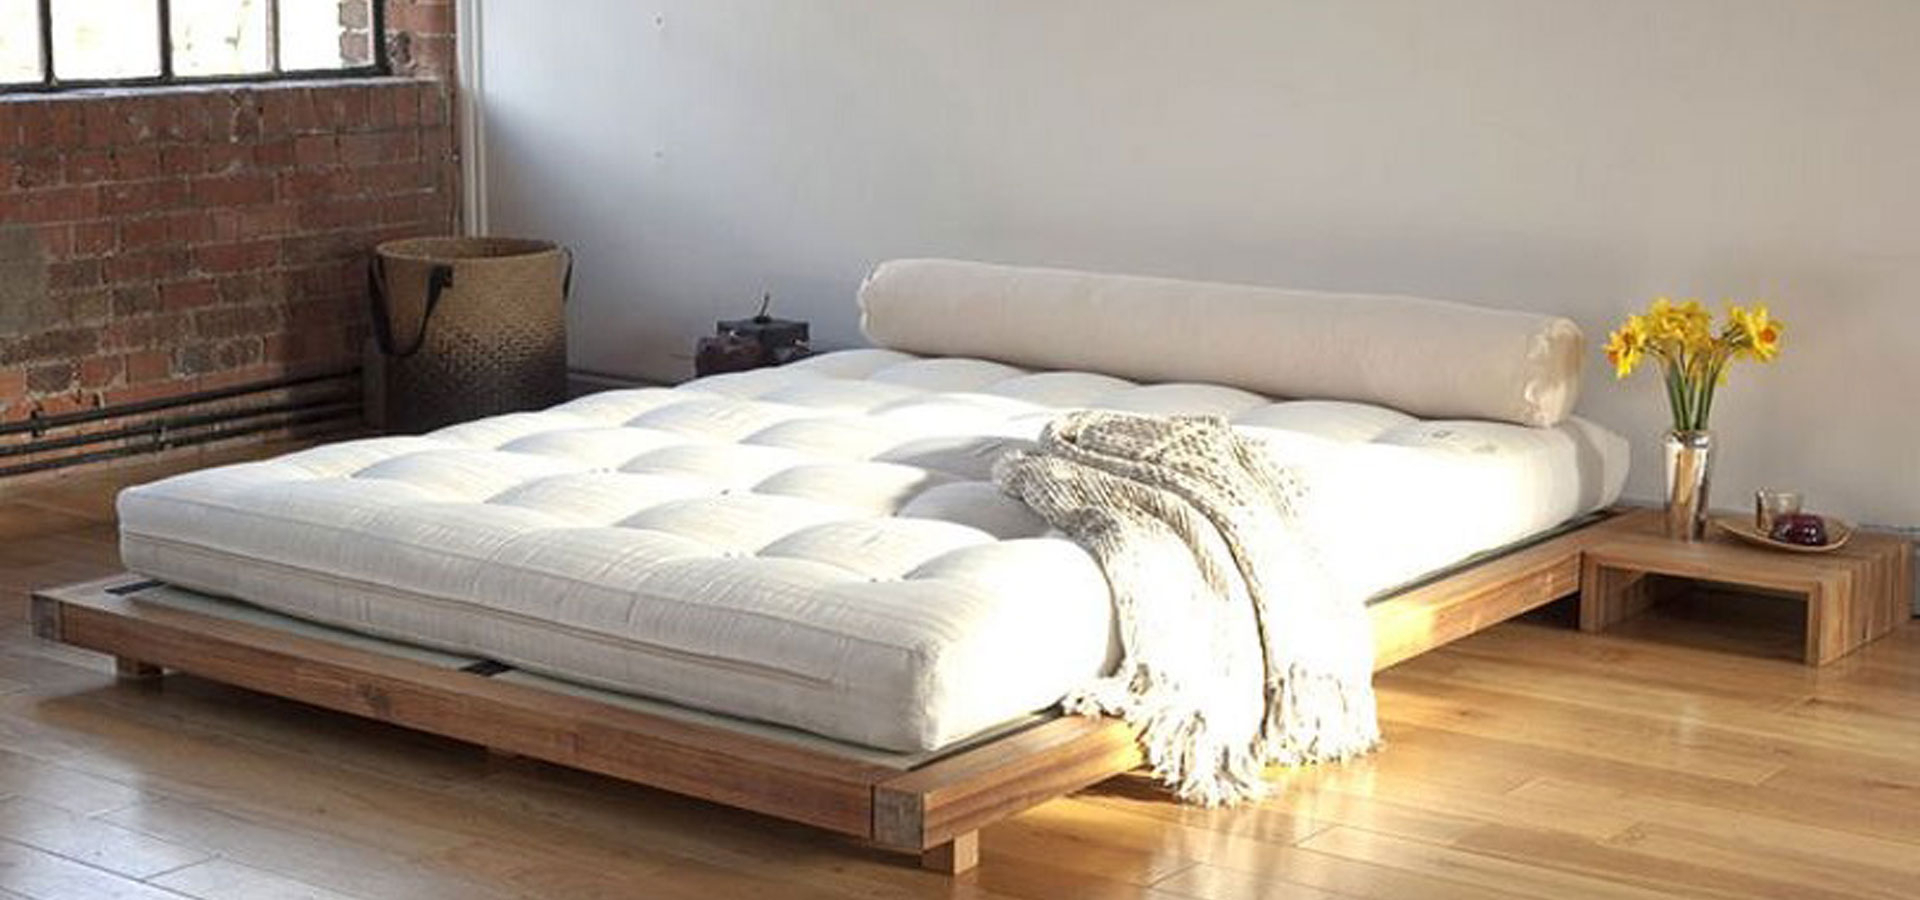 single headboard for king size mattress